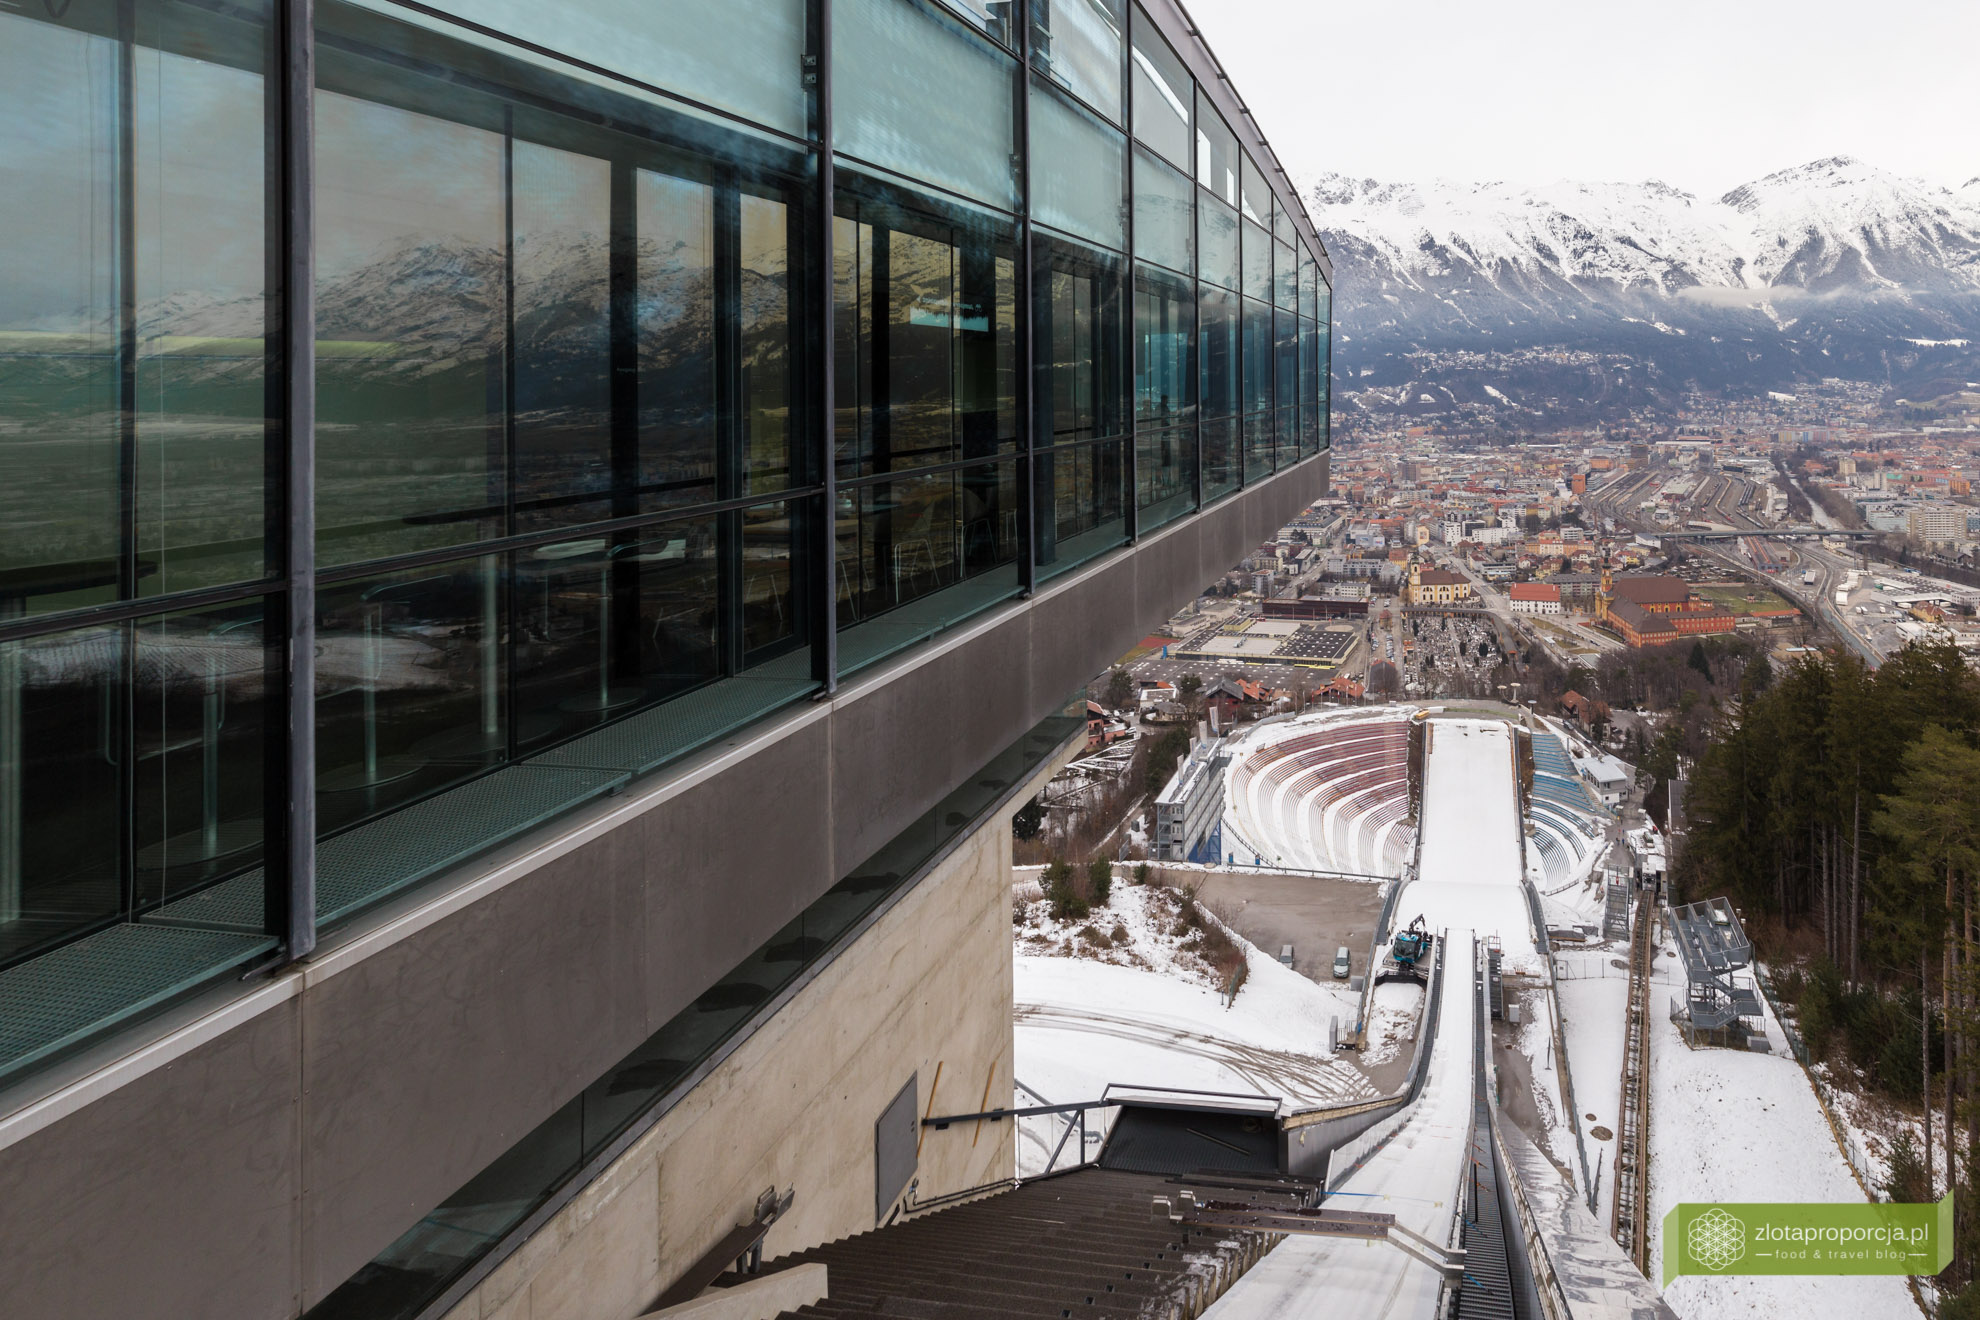 Innsbruck, Tyrol, Austria, atrakcje Innsbrucka, skocznia Bergisel, skocznia narciarska w Innsbrucku